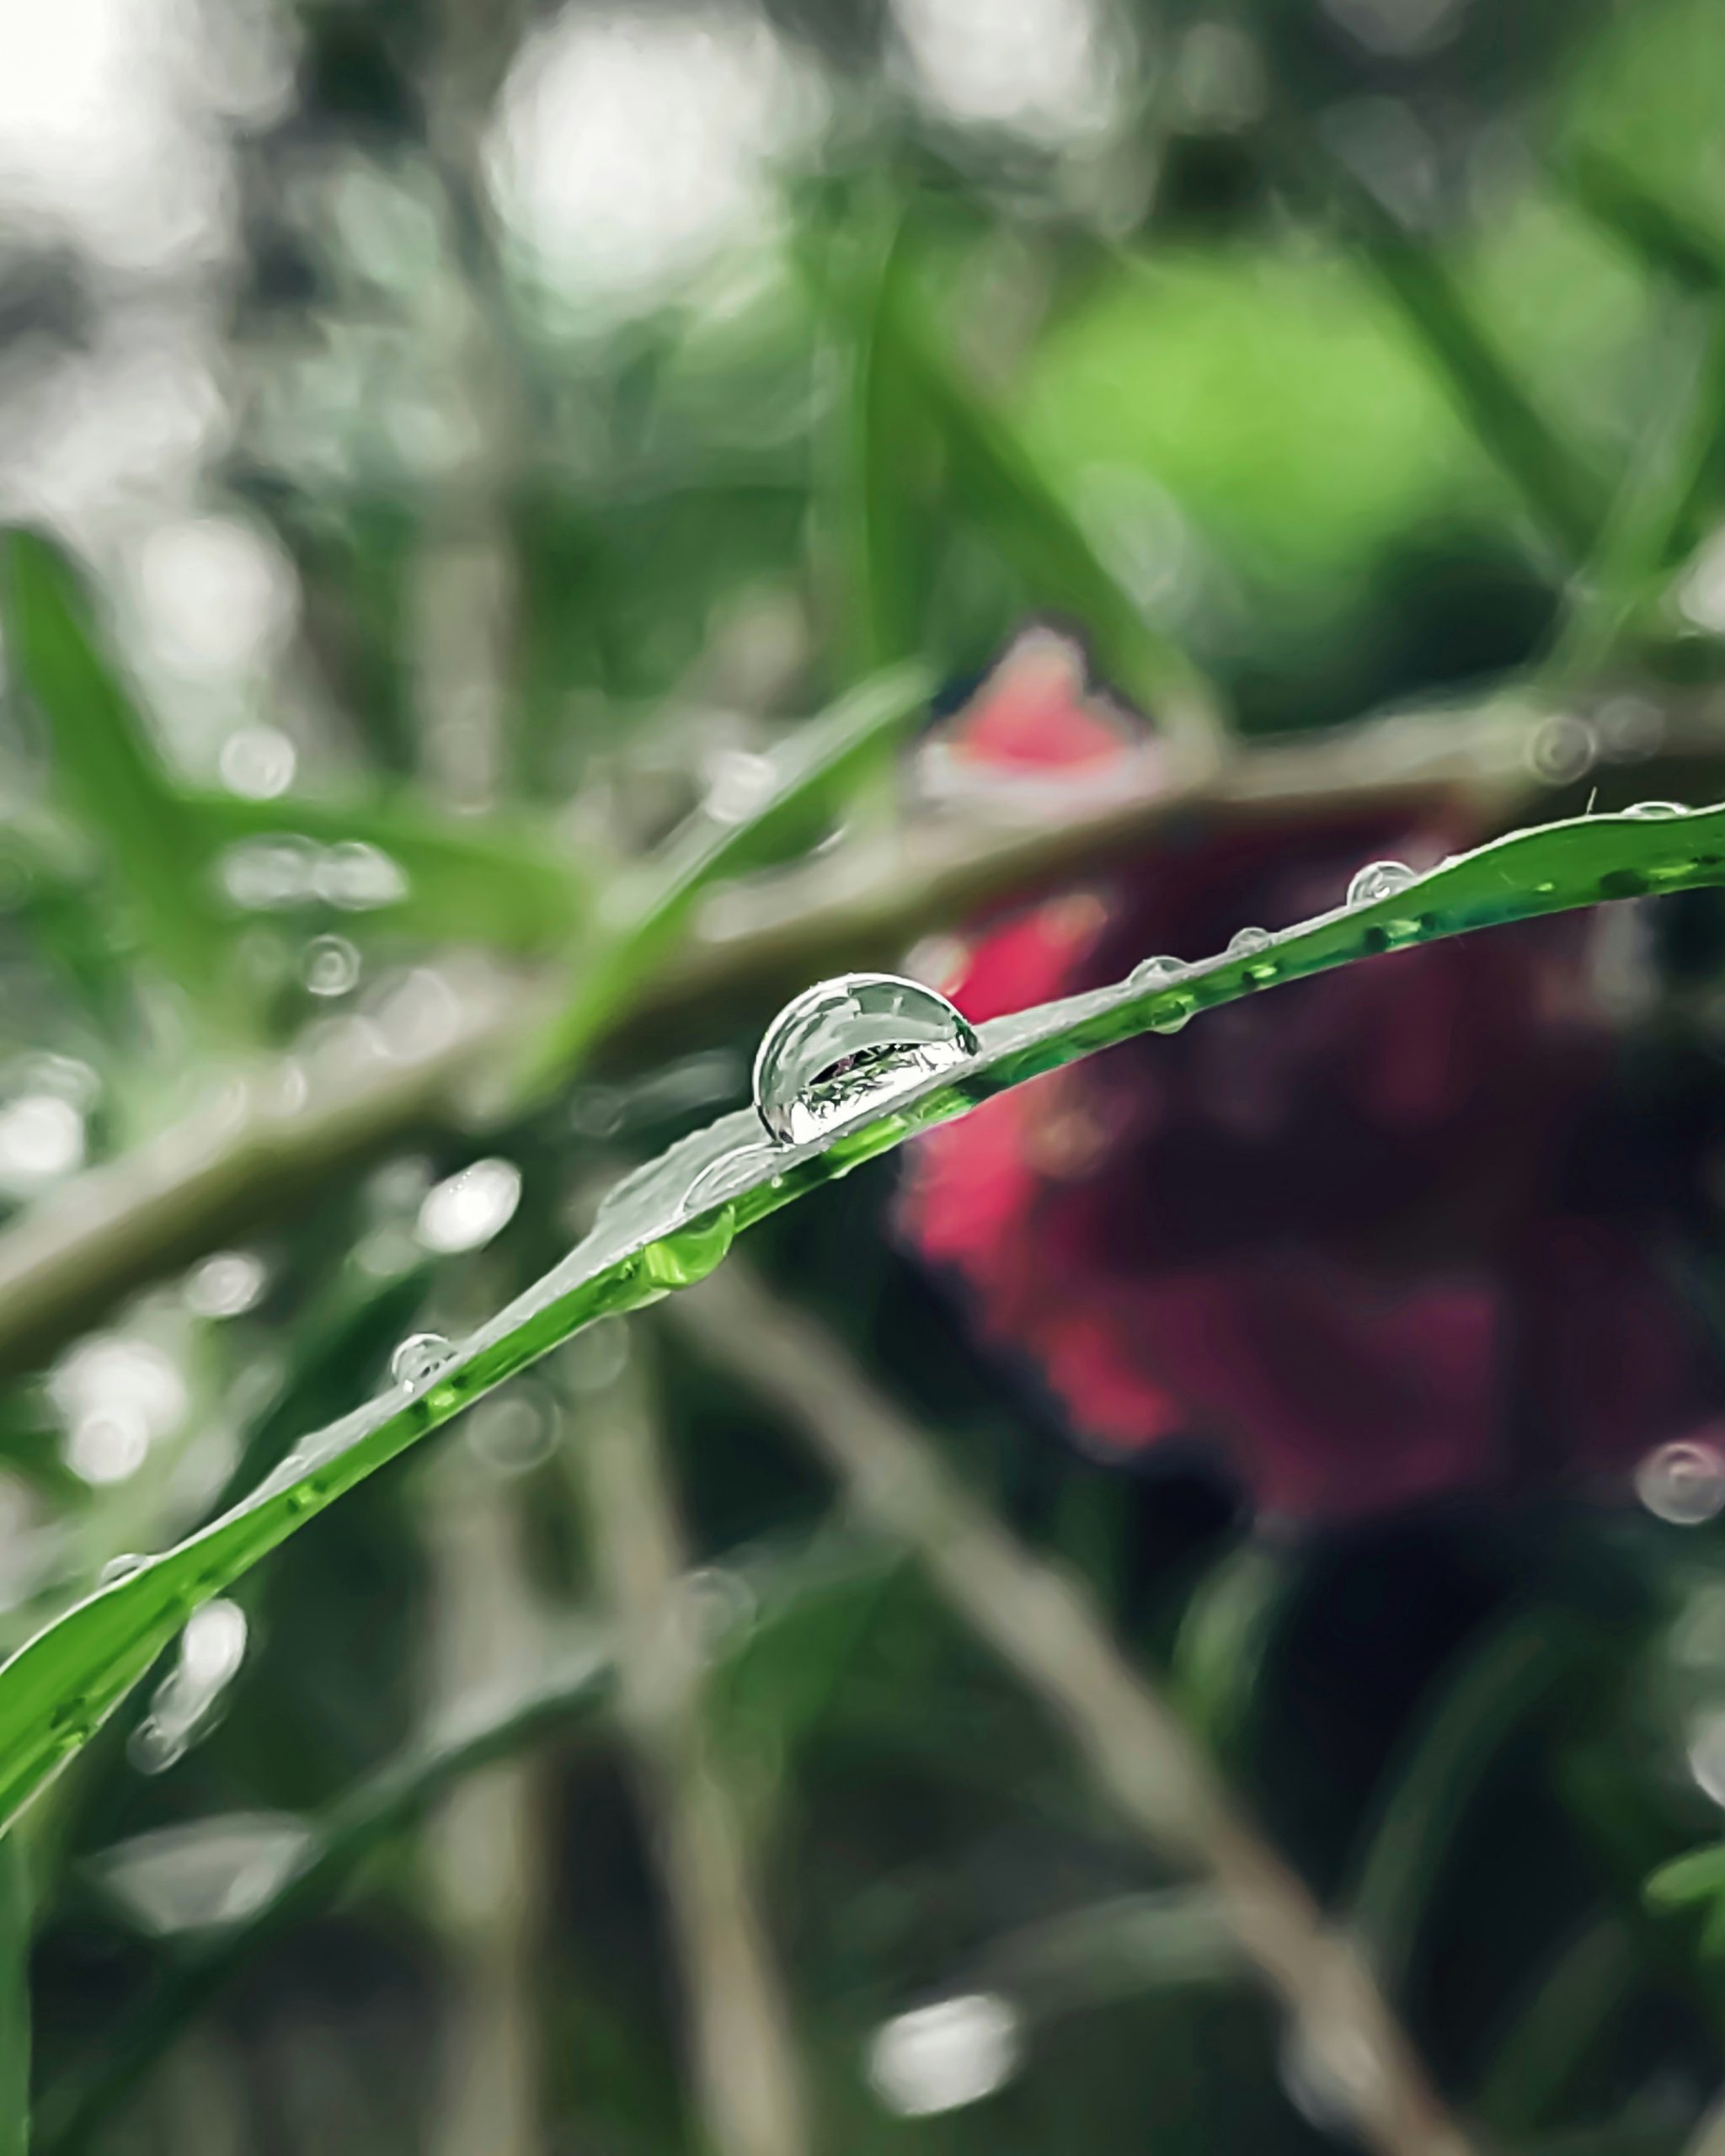 Tiny rain droplet on grass